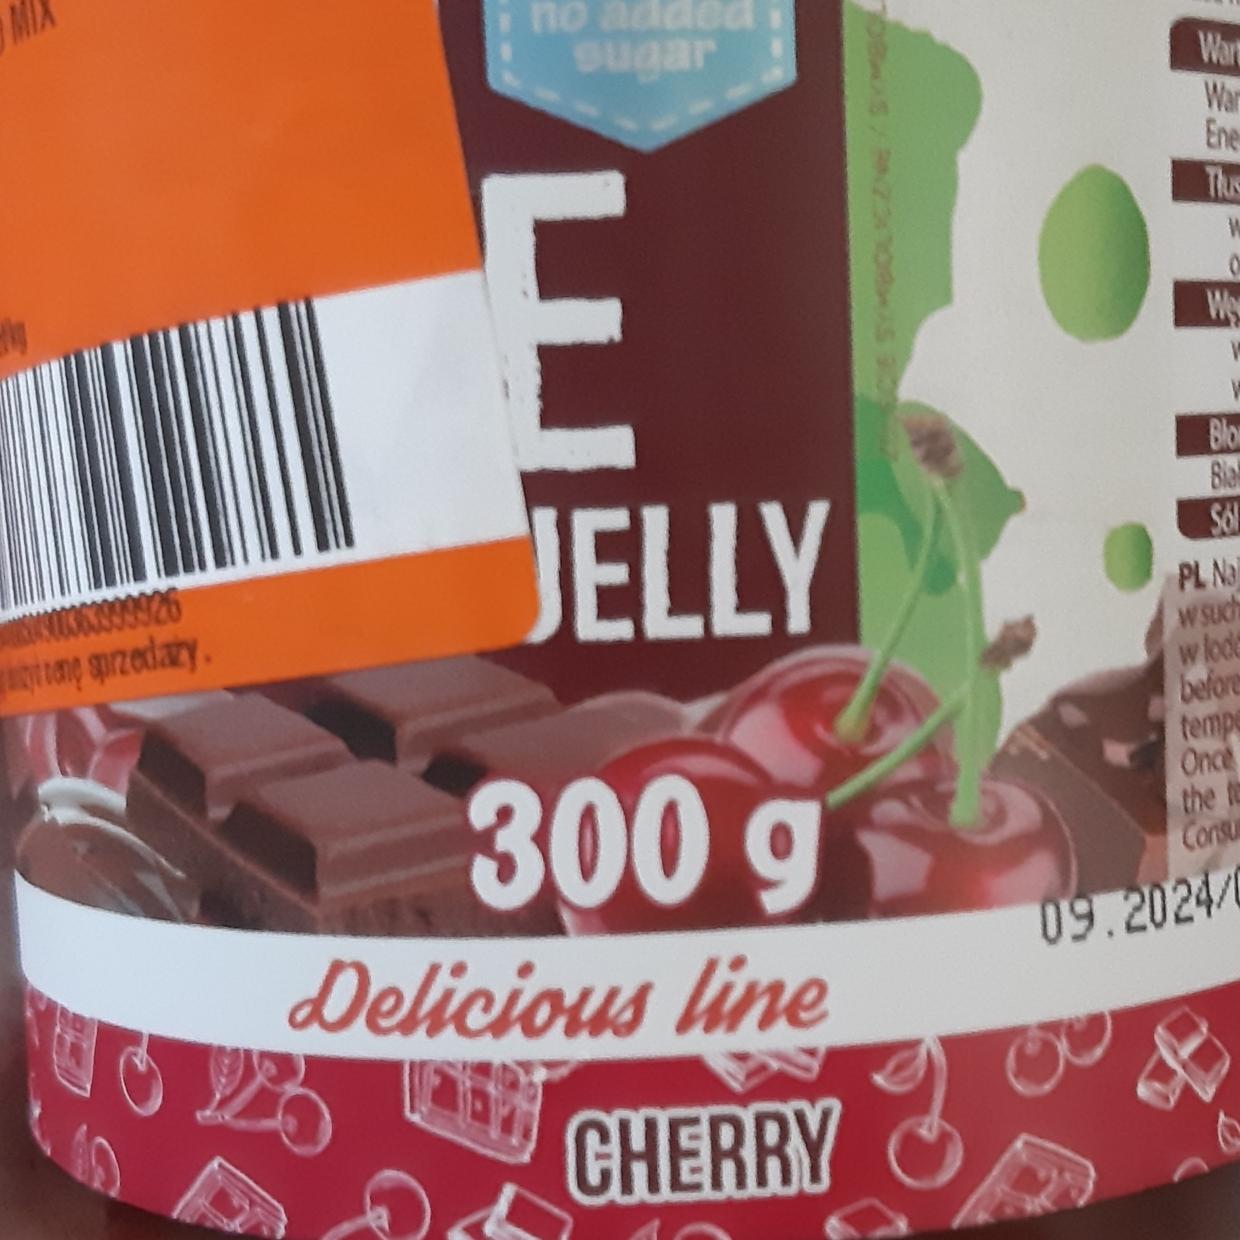 Fotografie - Frulove Choco in Jelly Allnutrition